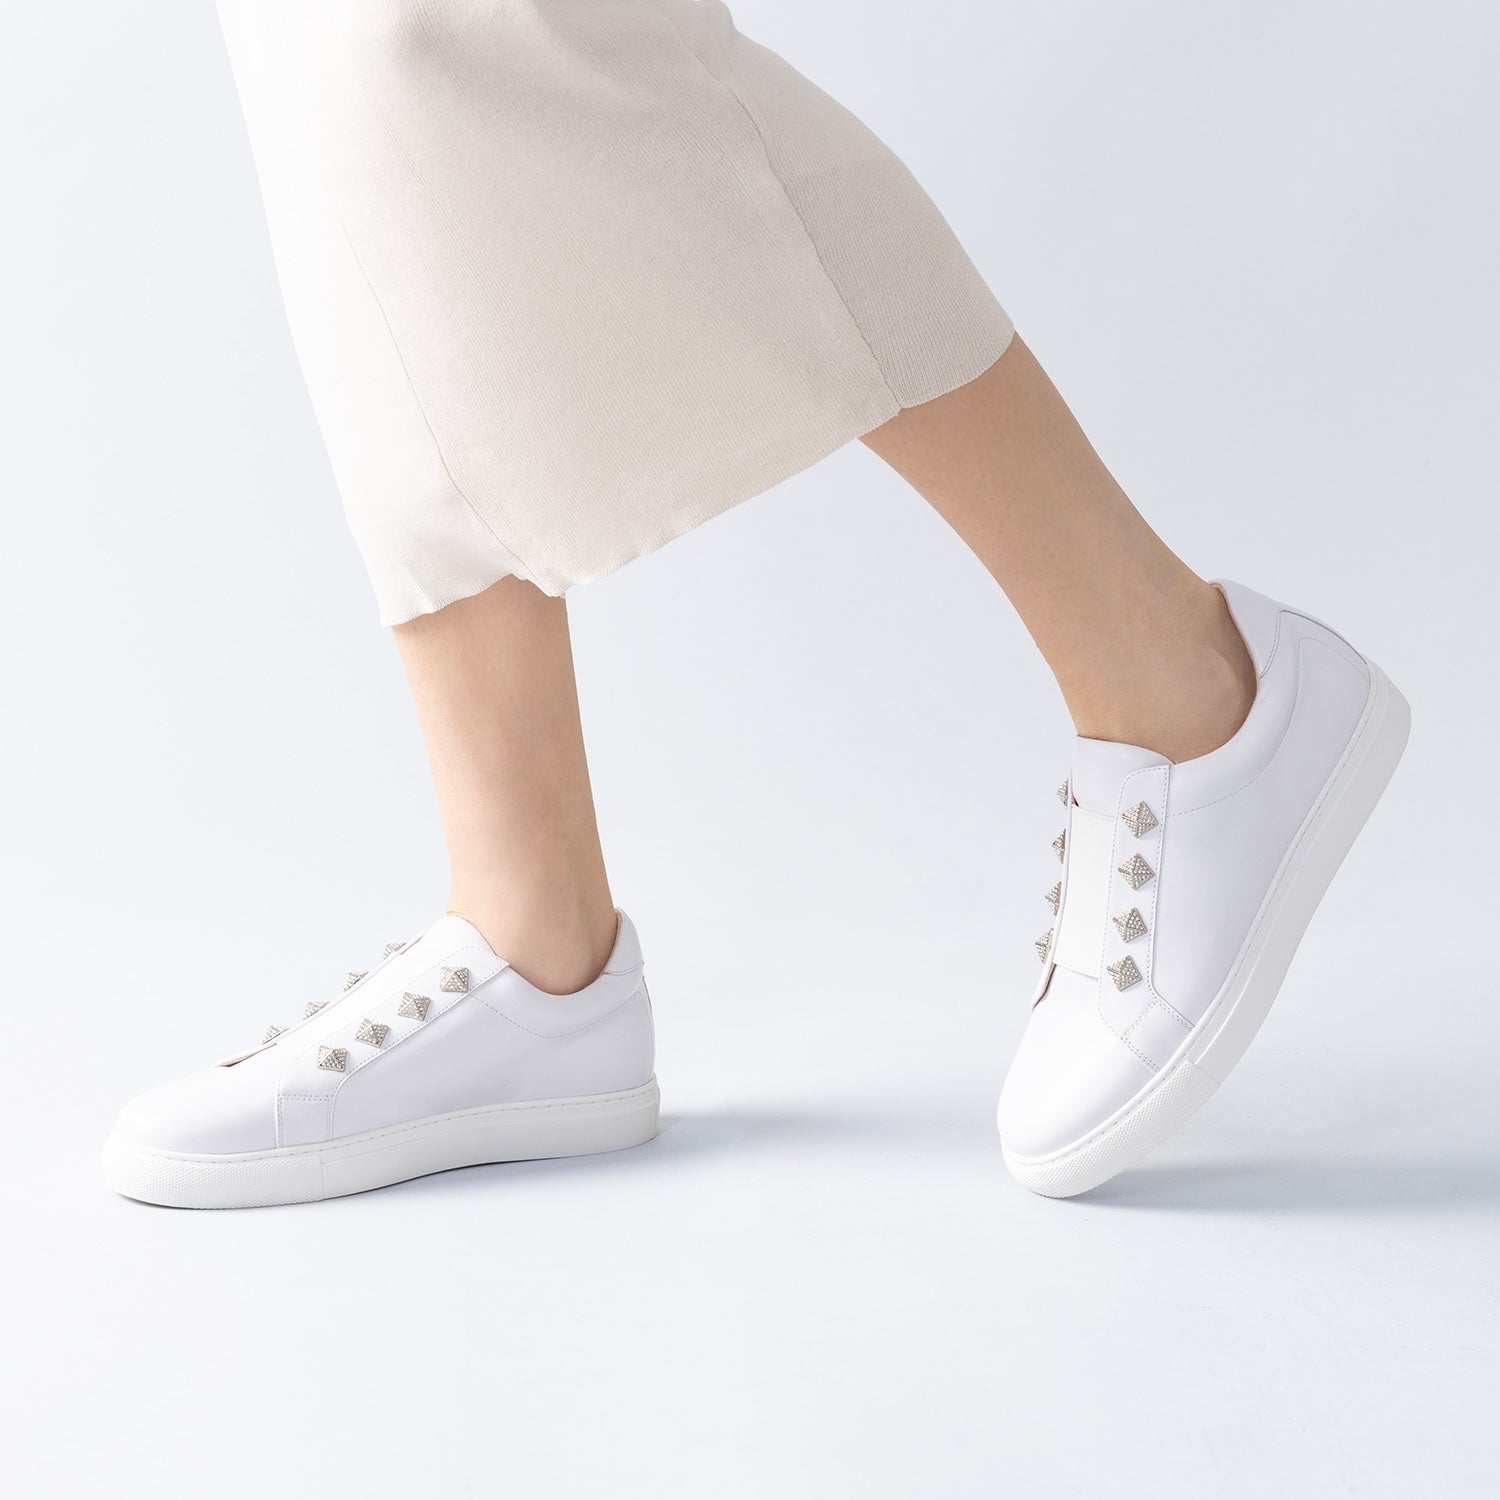 Dandy Sneaker | White leather